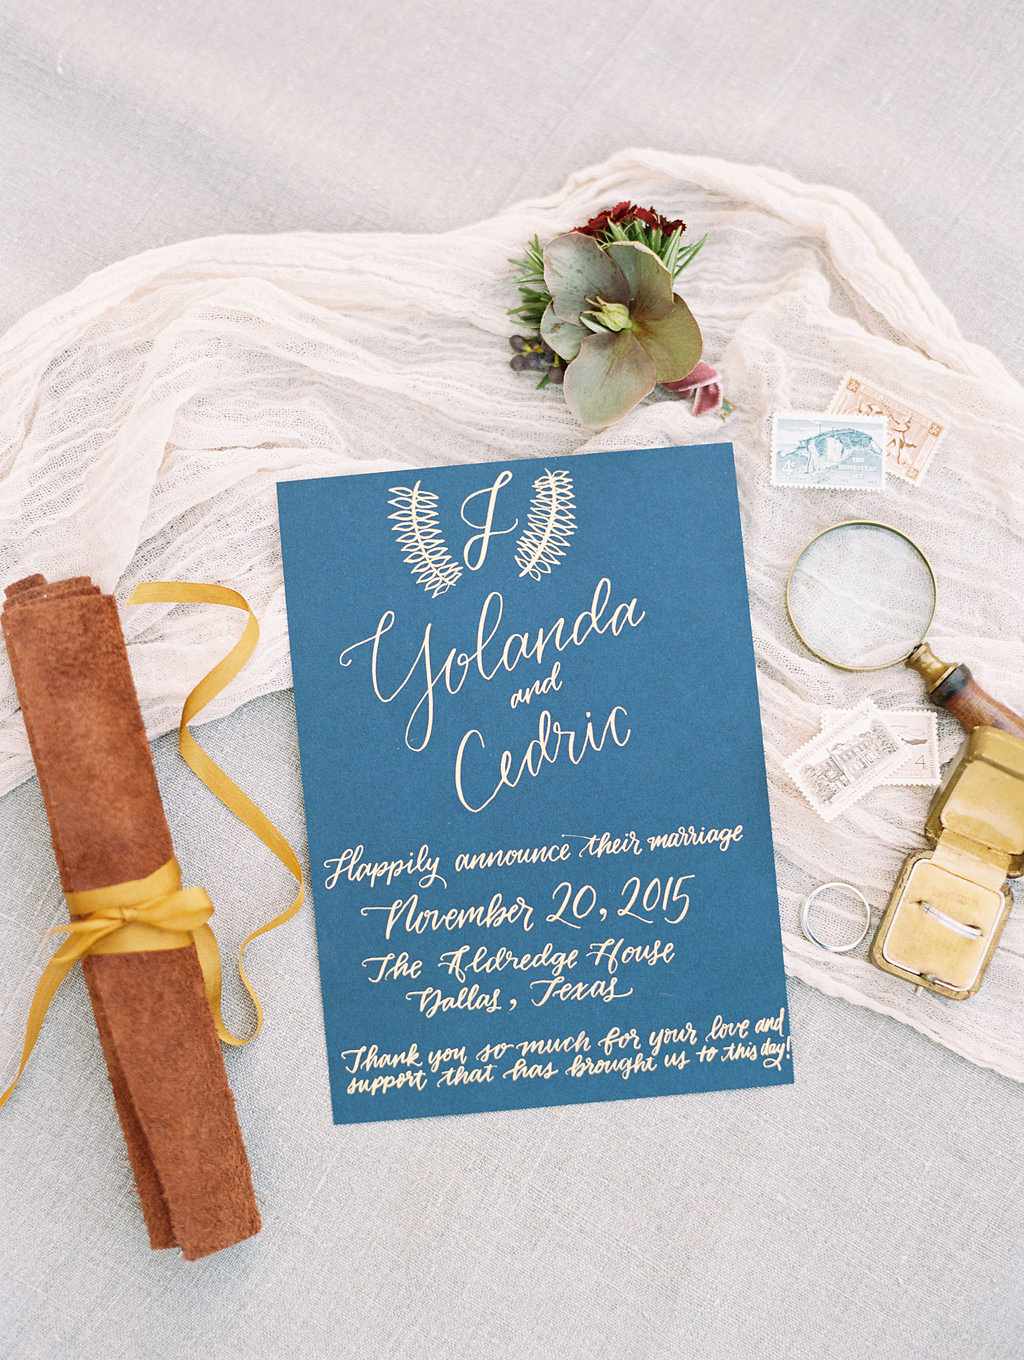 yolanda cedric wedding invite